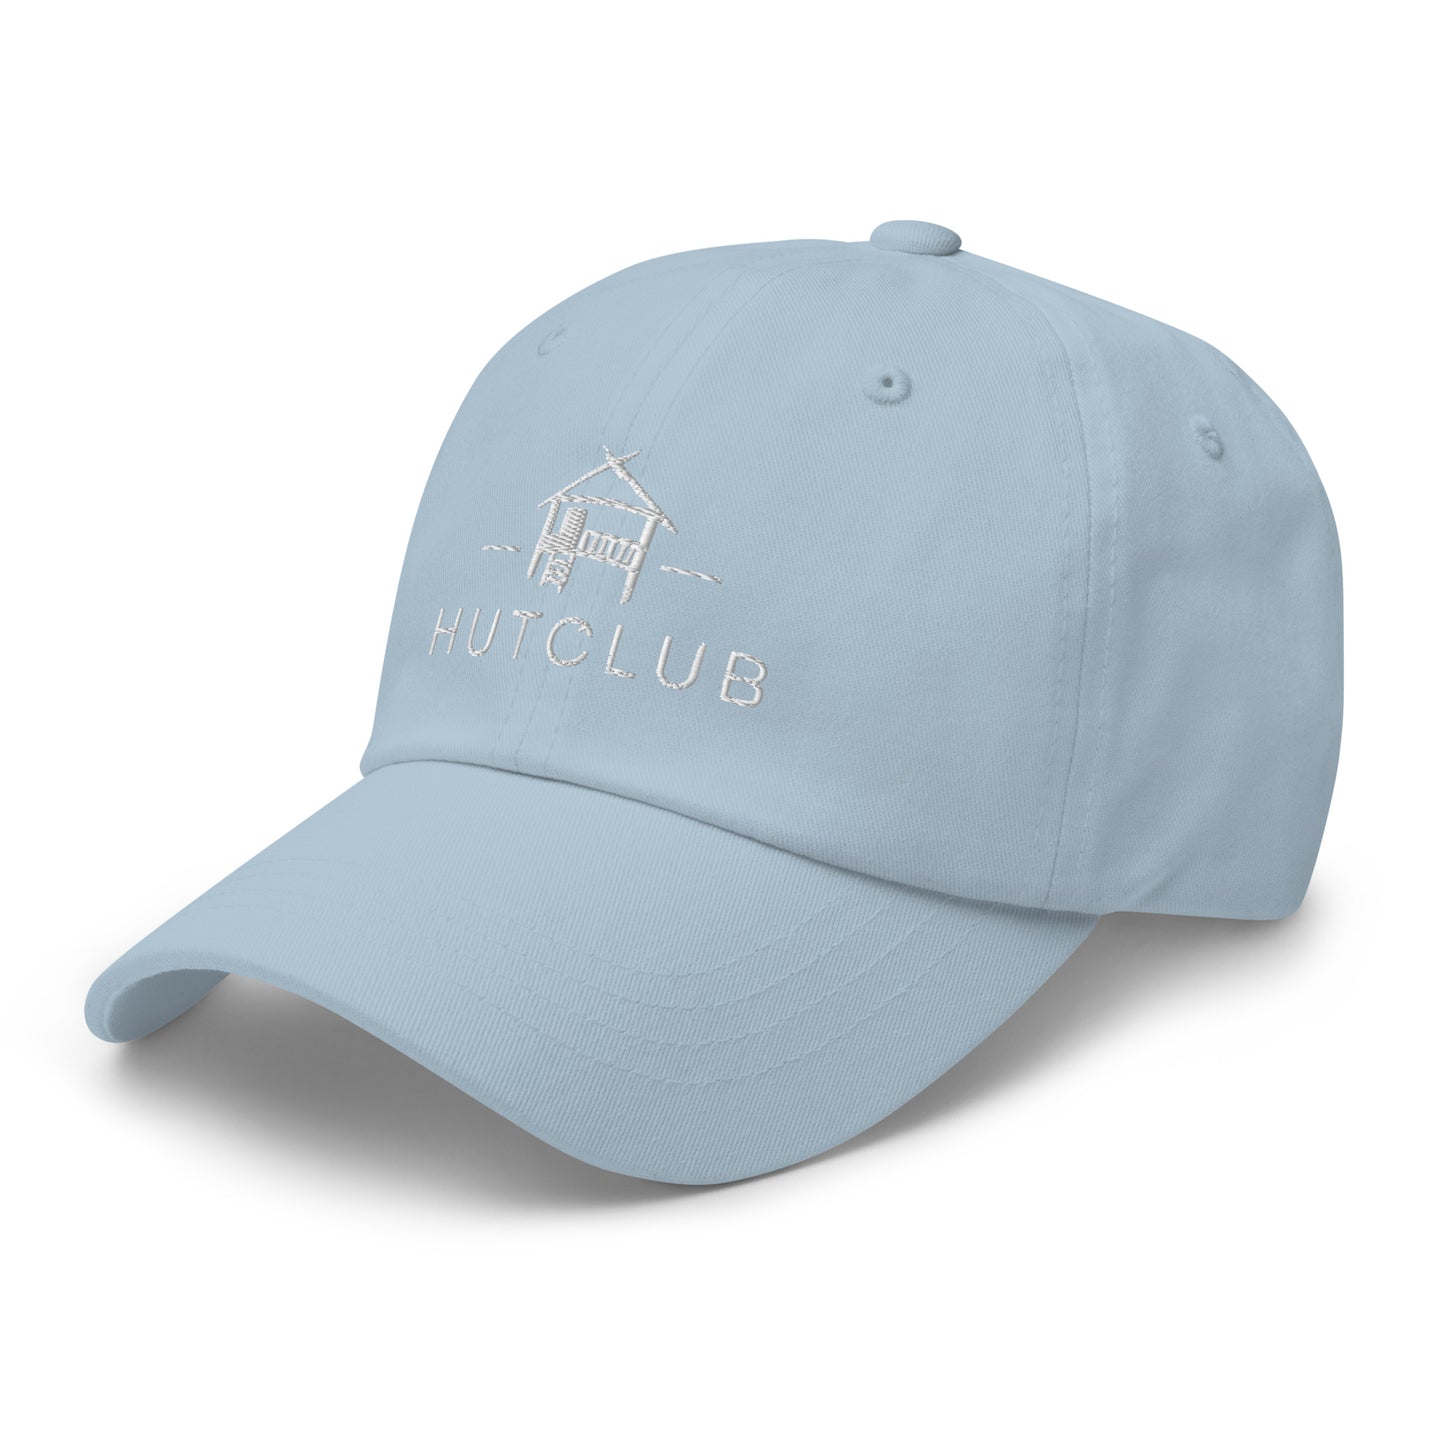 Hutclub White Logo Hat